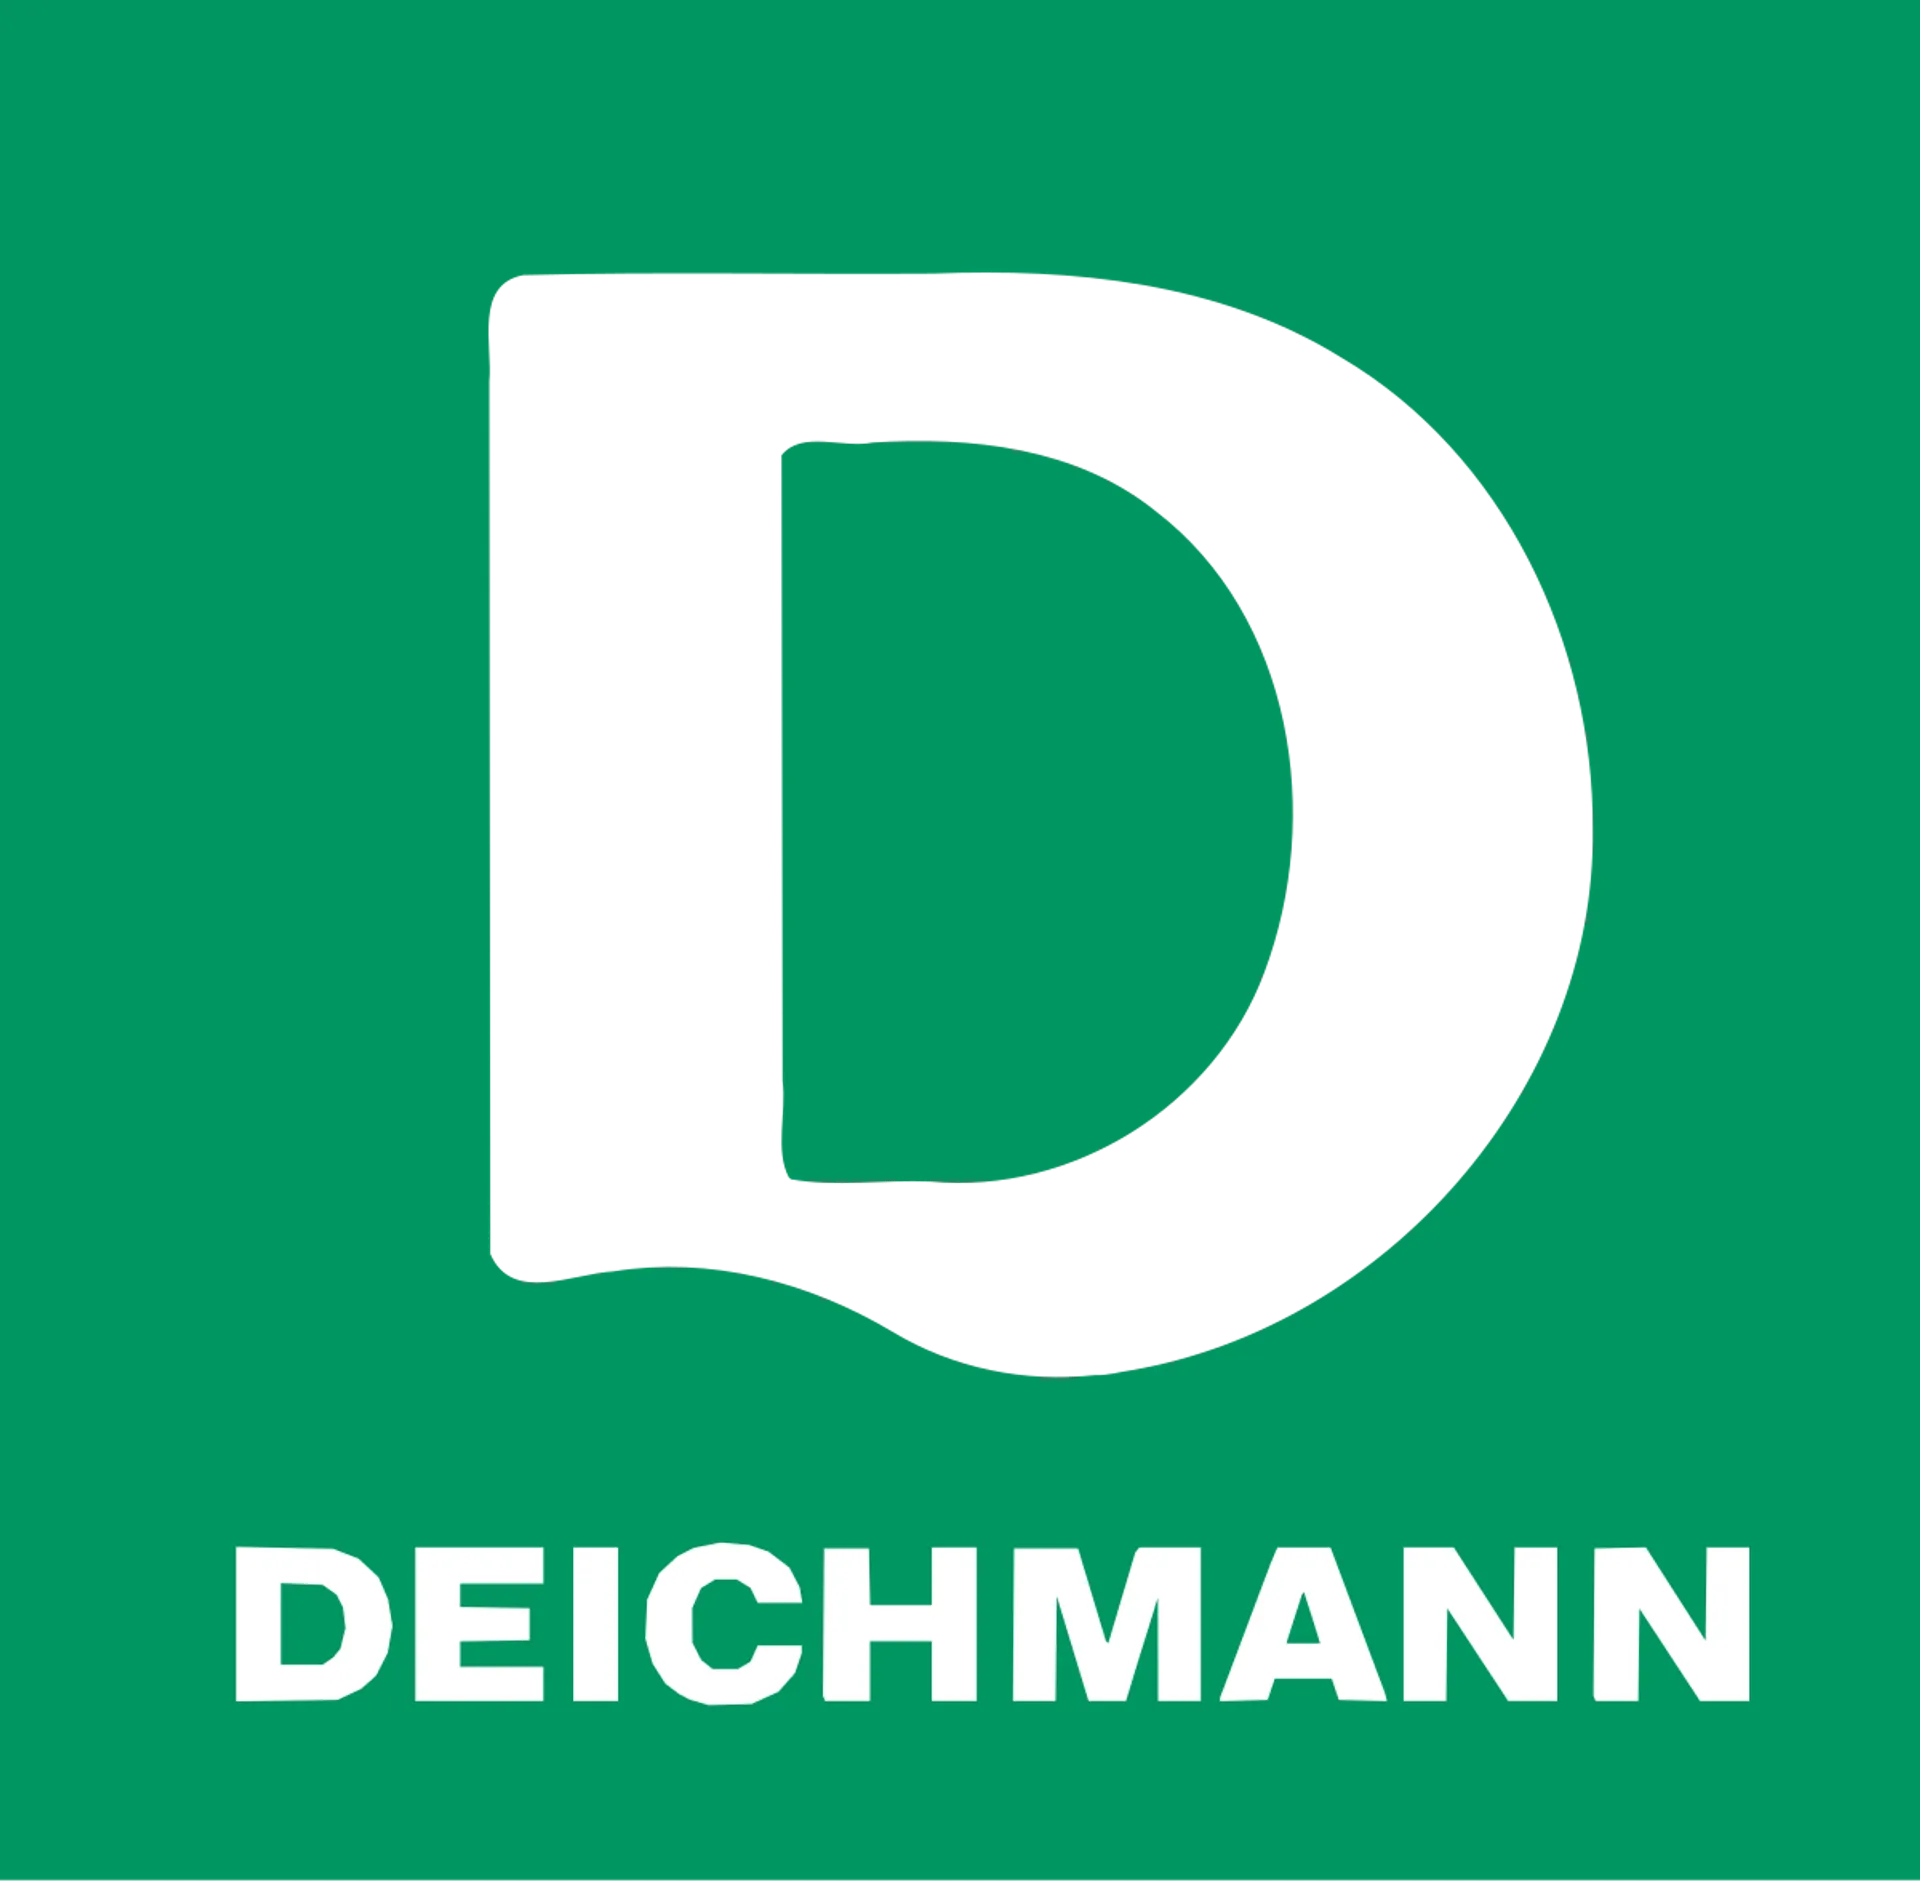 DEICHMANN logo